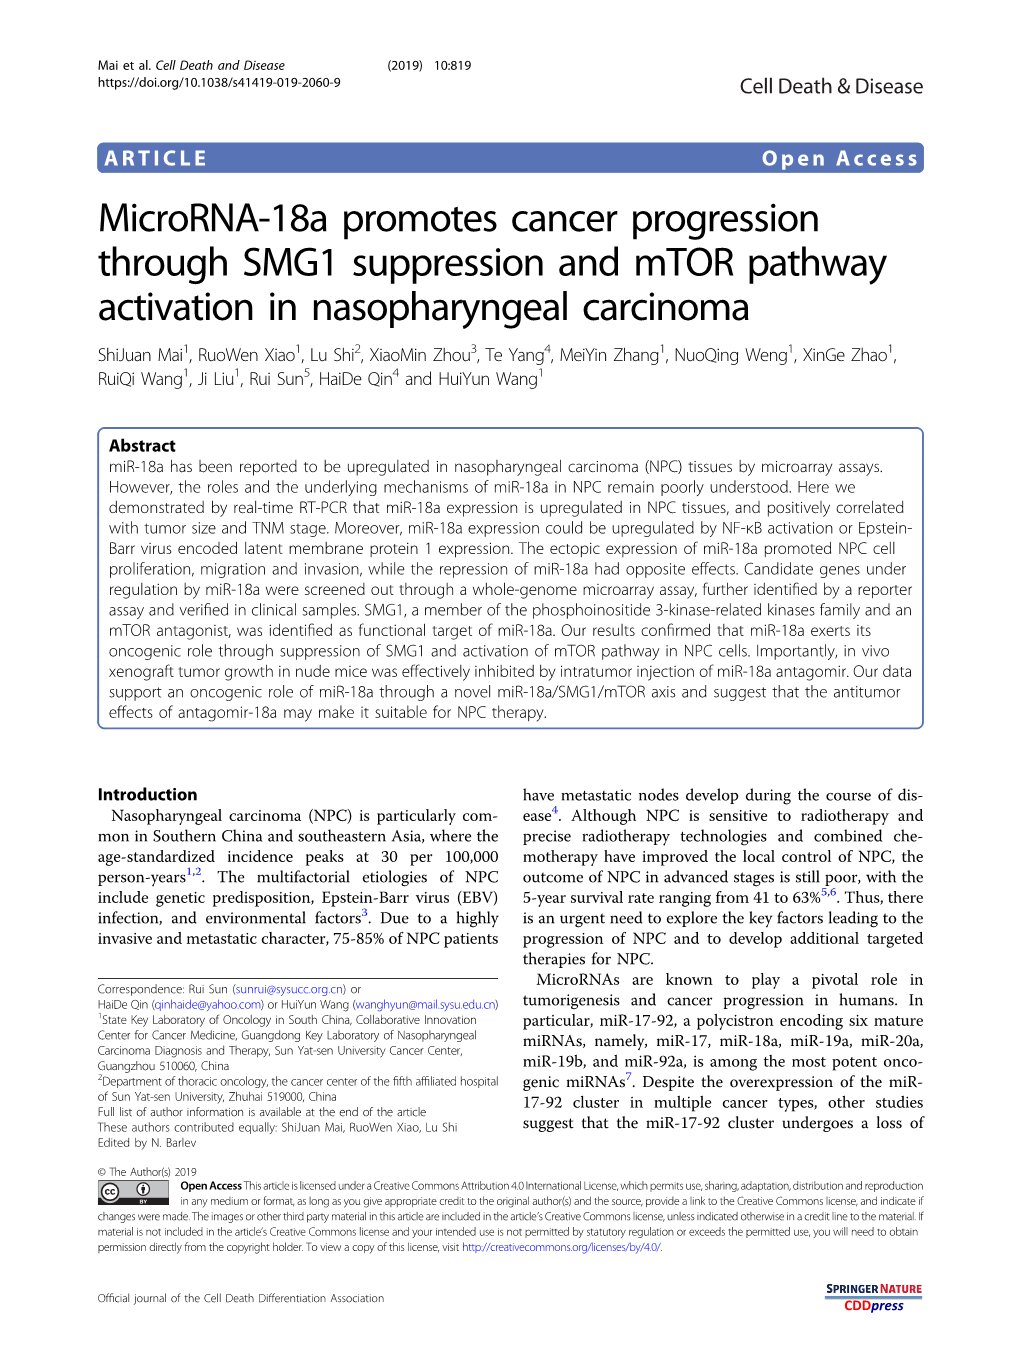 Microrna-18A Promotes Cancer Progression Through SMG1